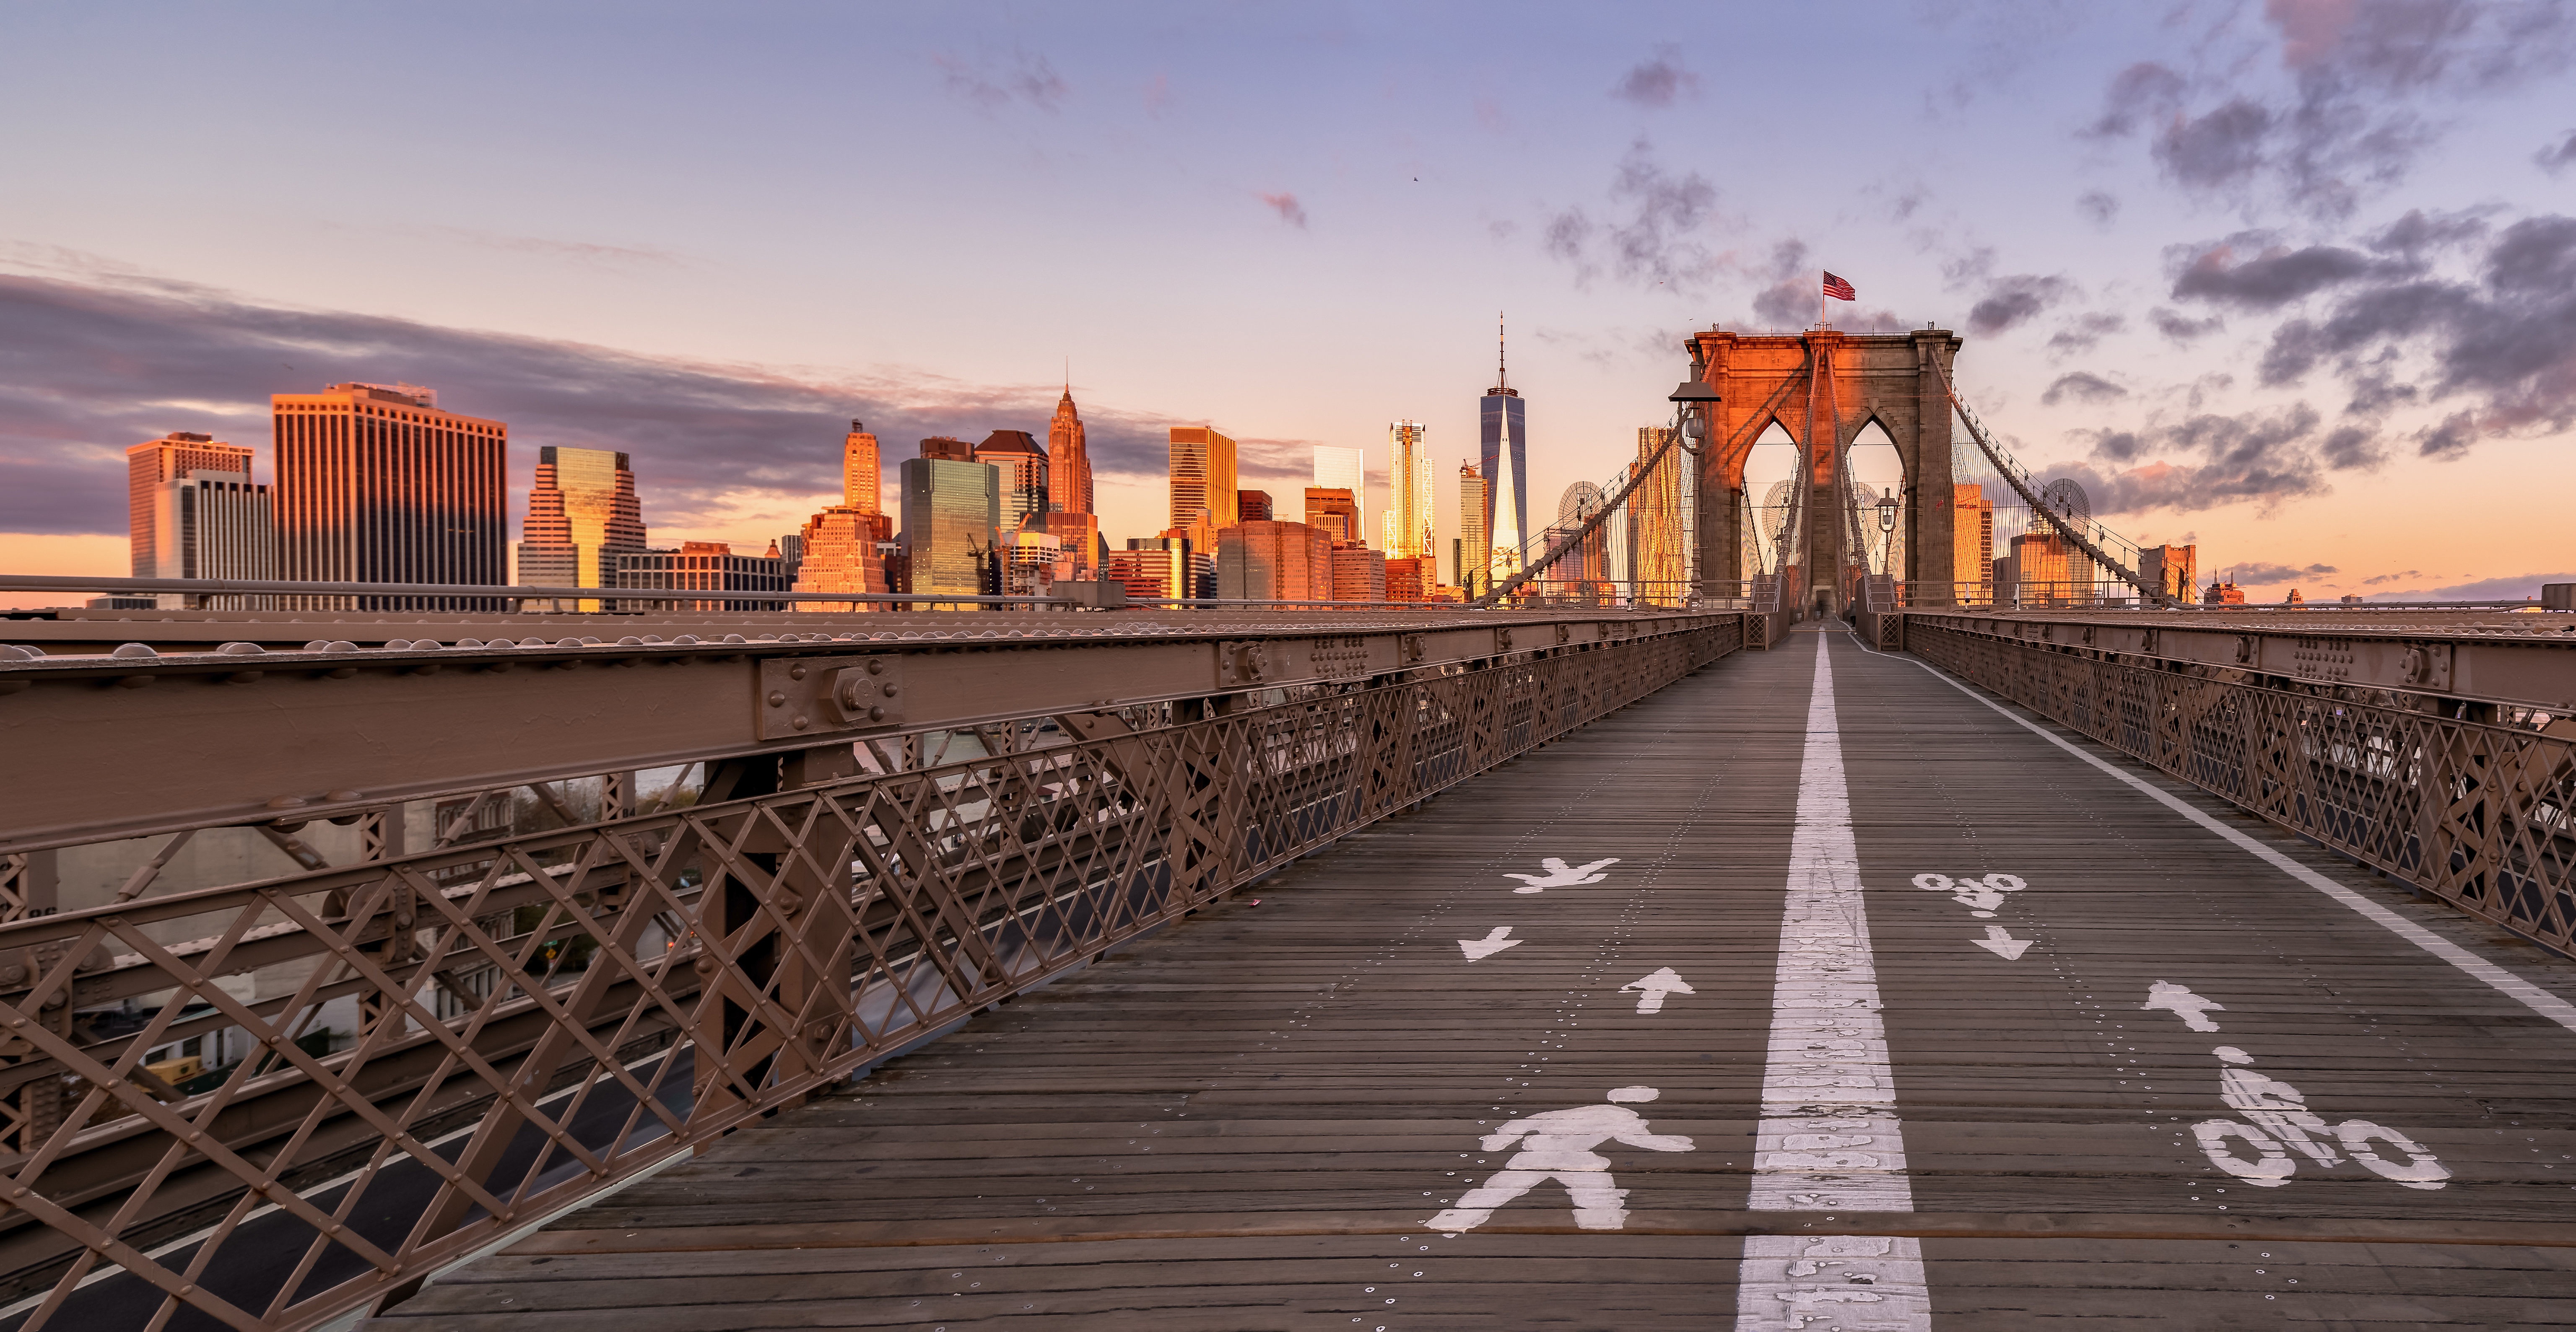 They the new bridge. Бруклинский мост Нью-Йорк. “Манхэттен бридж”. Моста в Нью Йорке. Нью Йорк Бруклин Билдинг. Бруклинский мост Бруклин и Манхэттен.